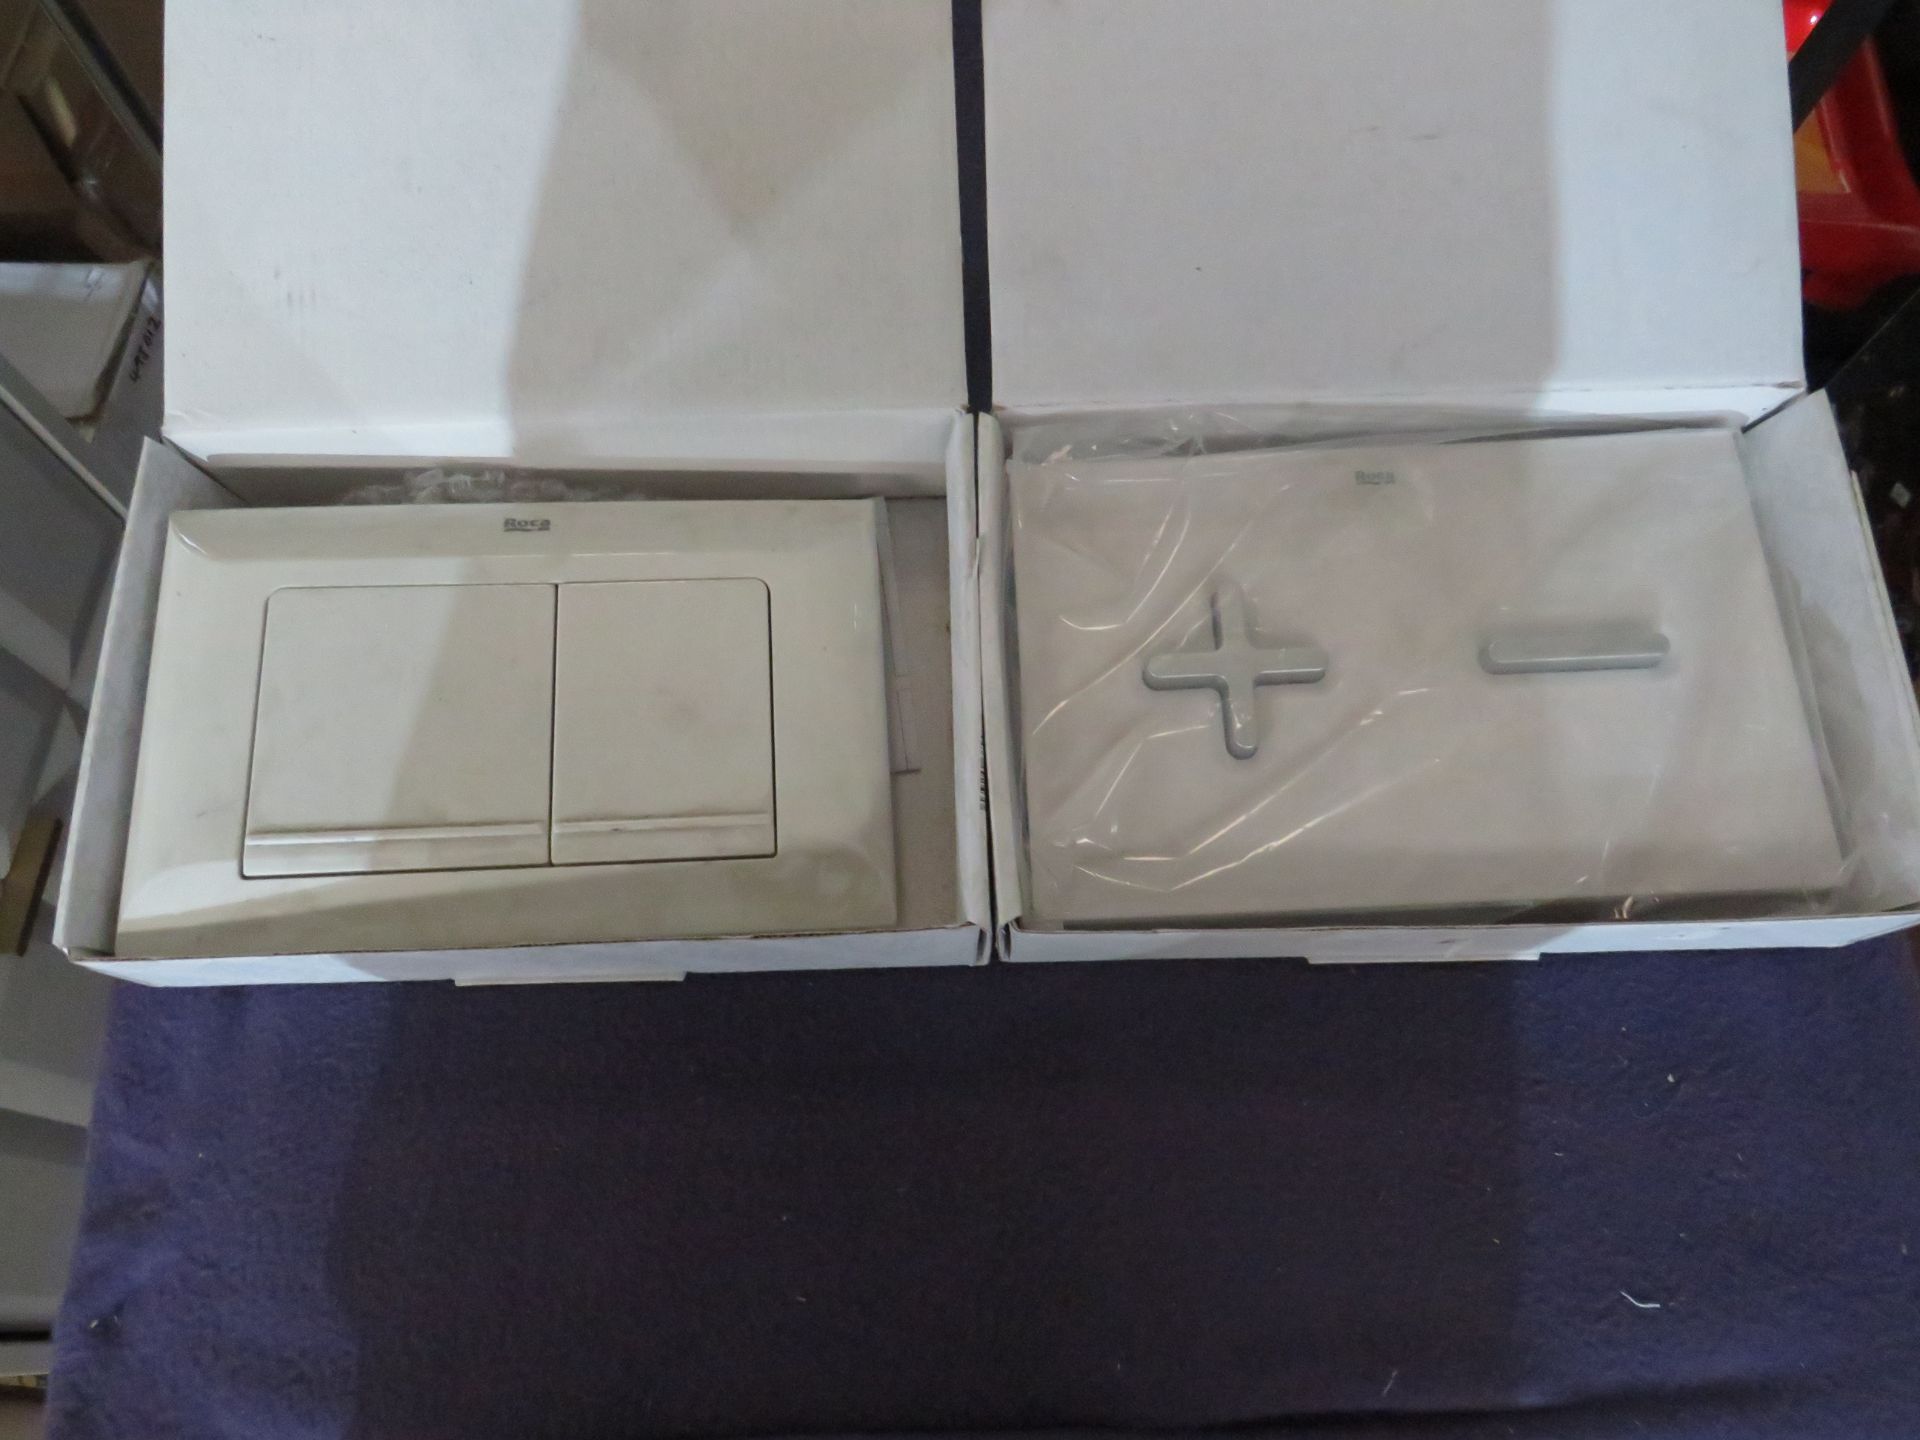 Roca - PL1 White Flush Plate - New & Boxed. Roca - PL6 Dual Combi Flush Plate - New & Boxed.